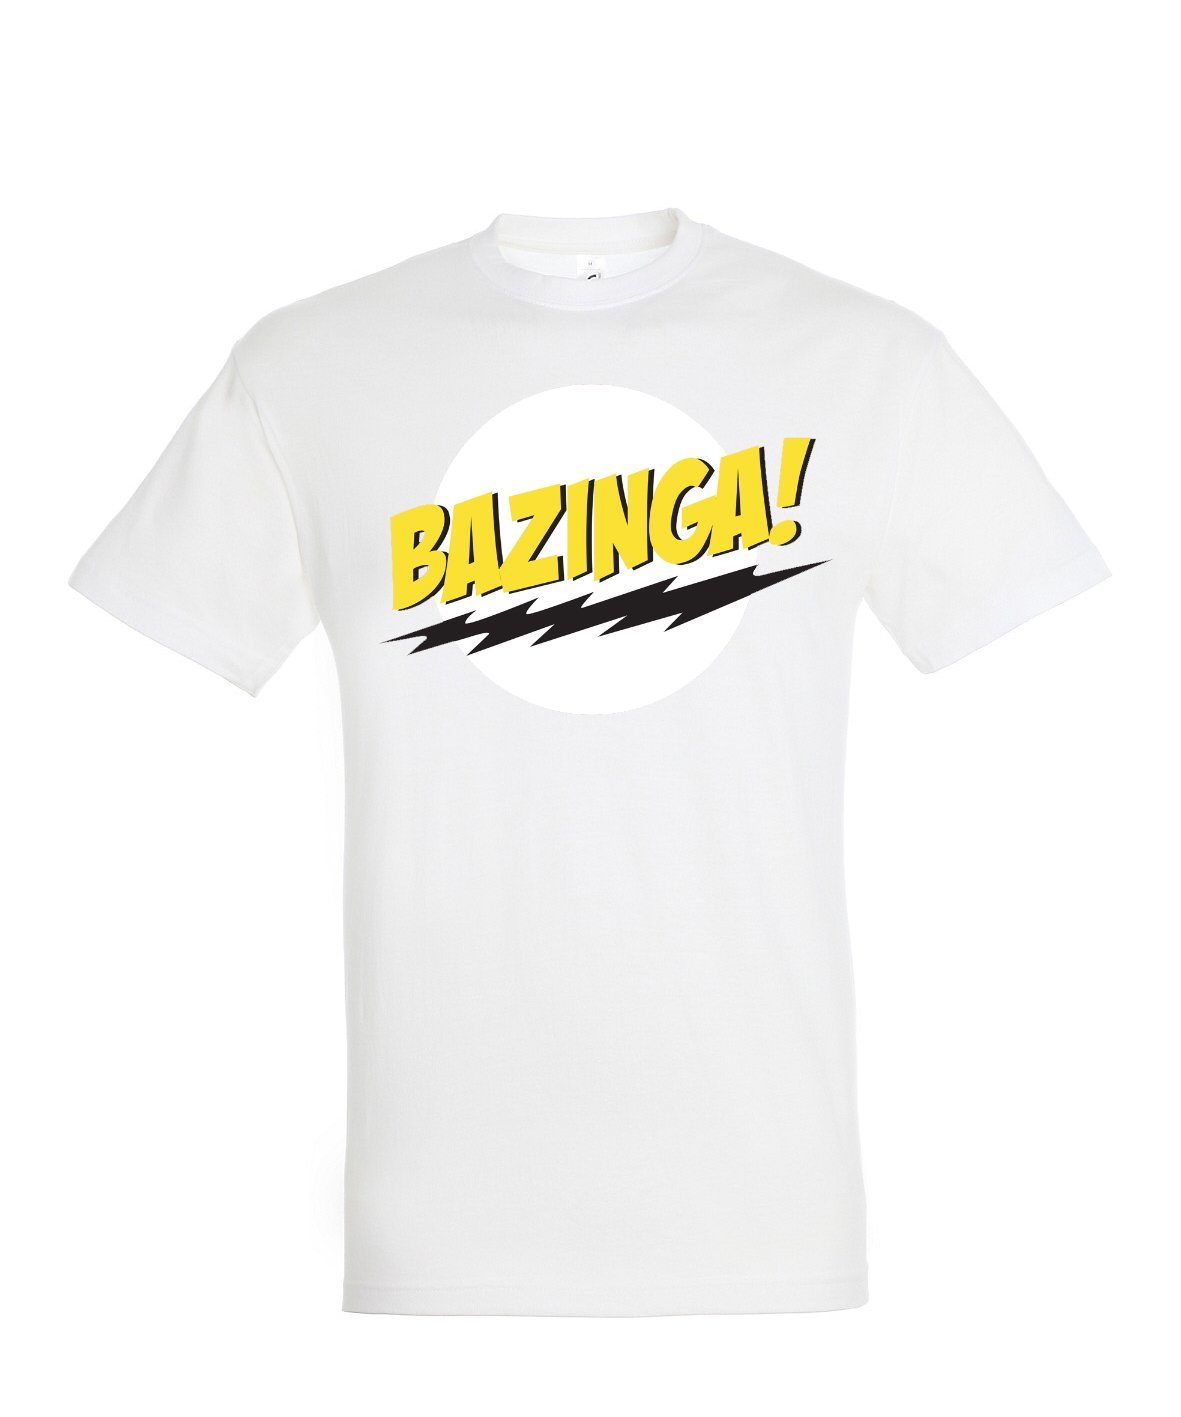 Youth Herren Frontprint trendigem T-Shirt Bazinga Weiß T-Shirt Mit Designz Modell